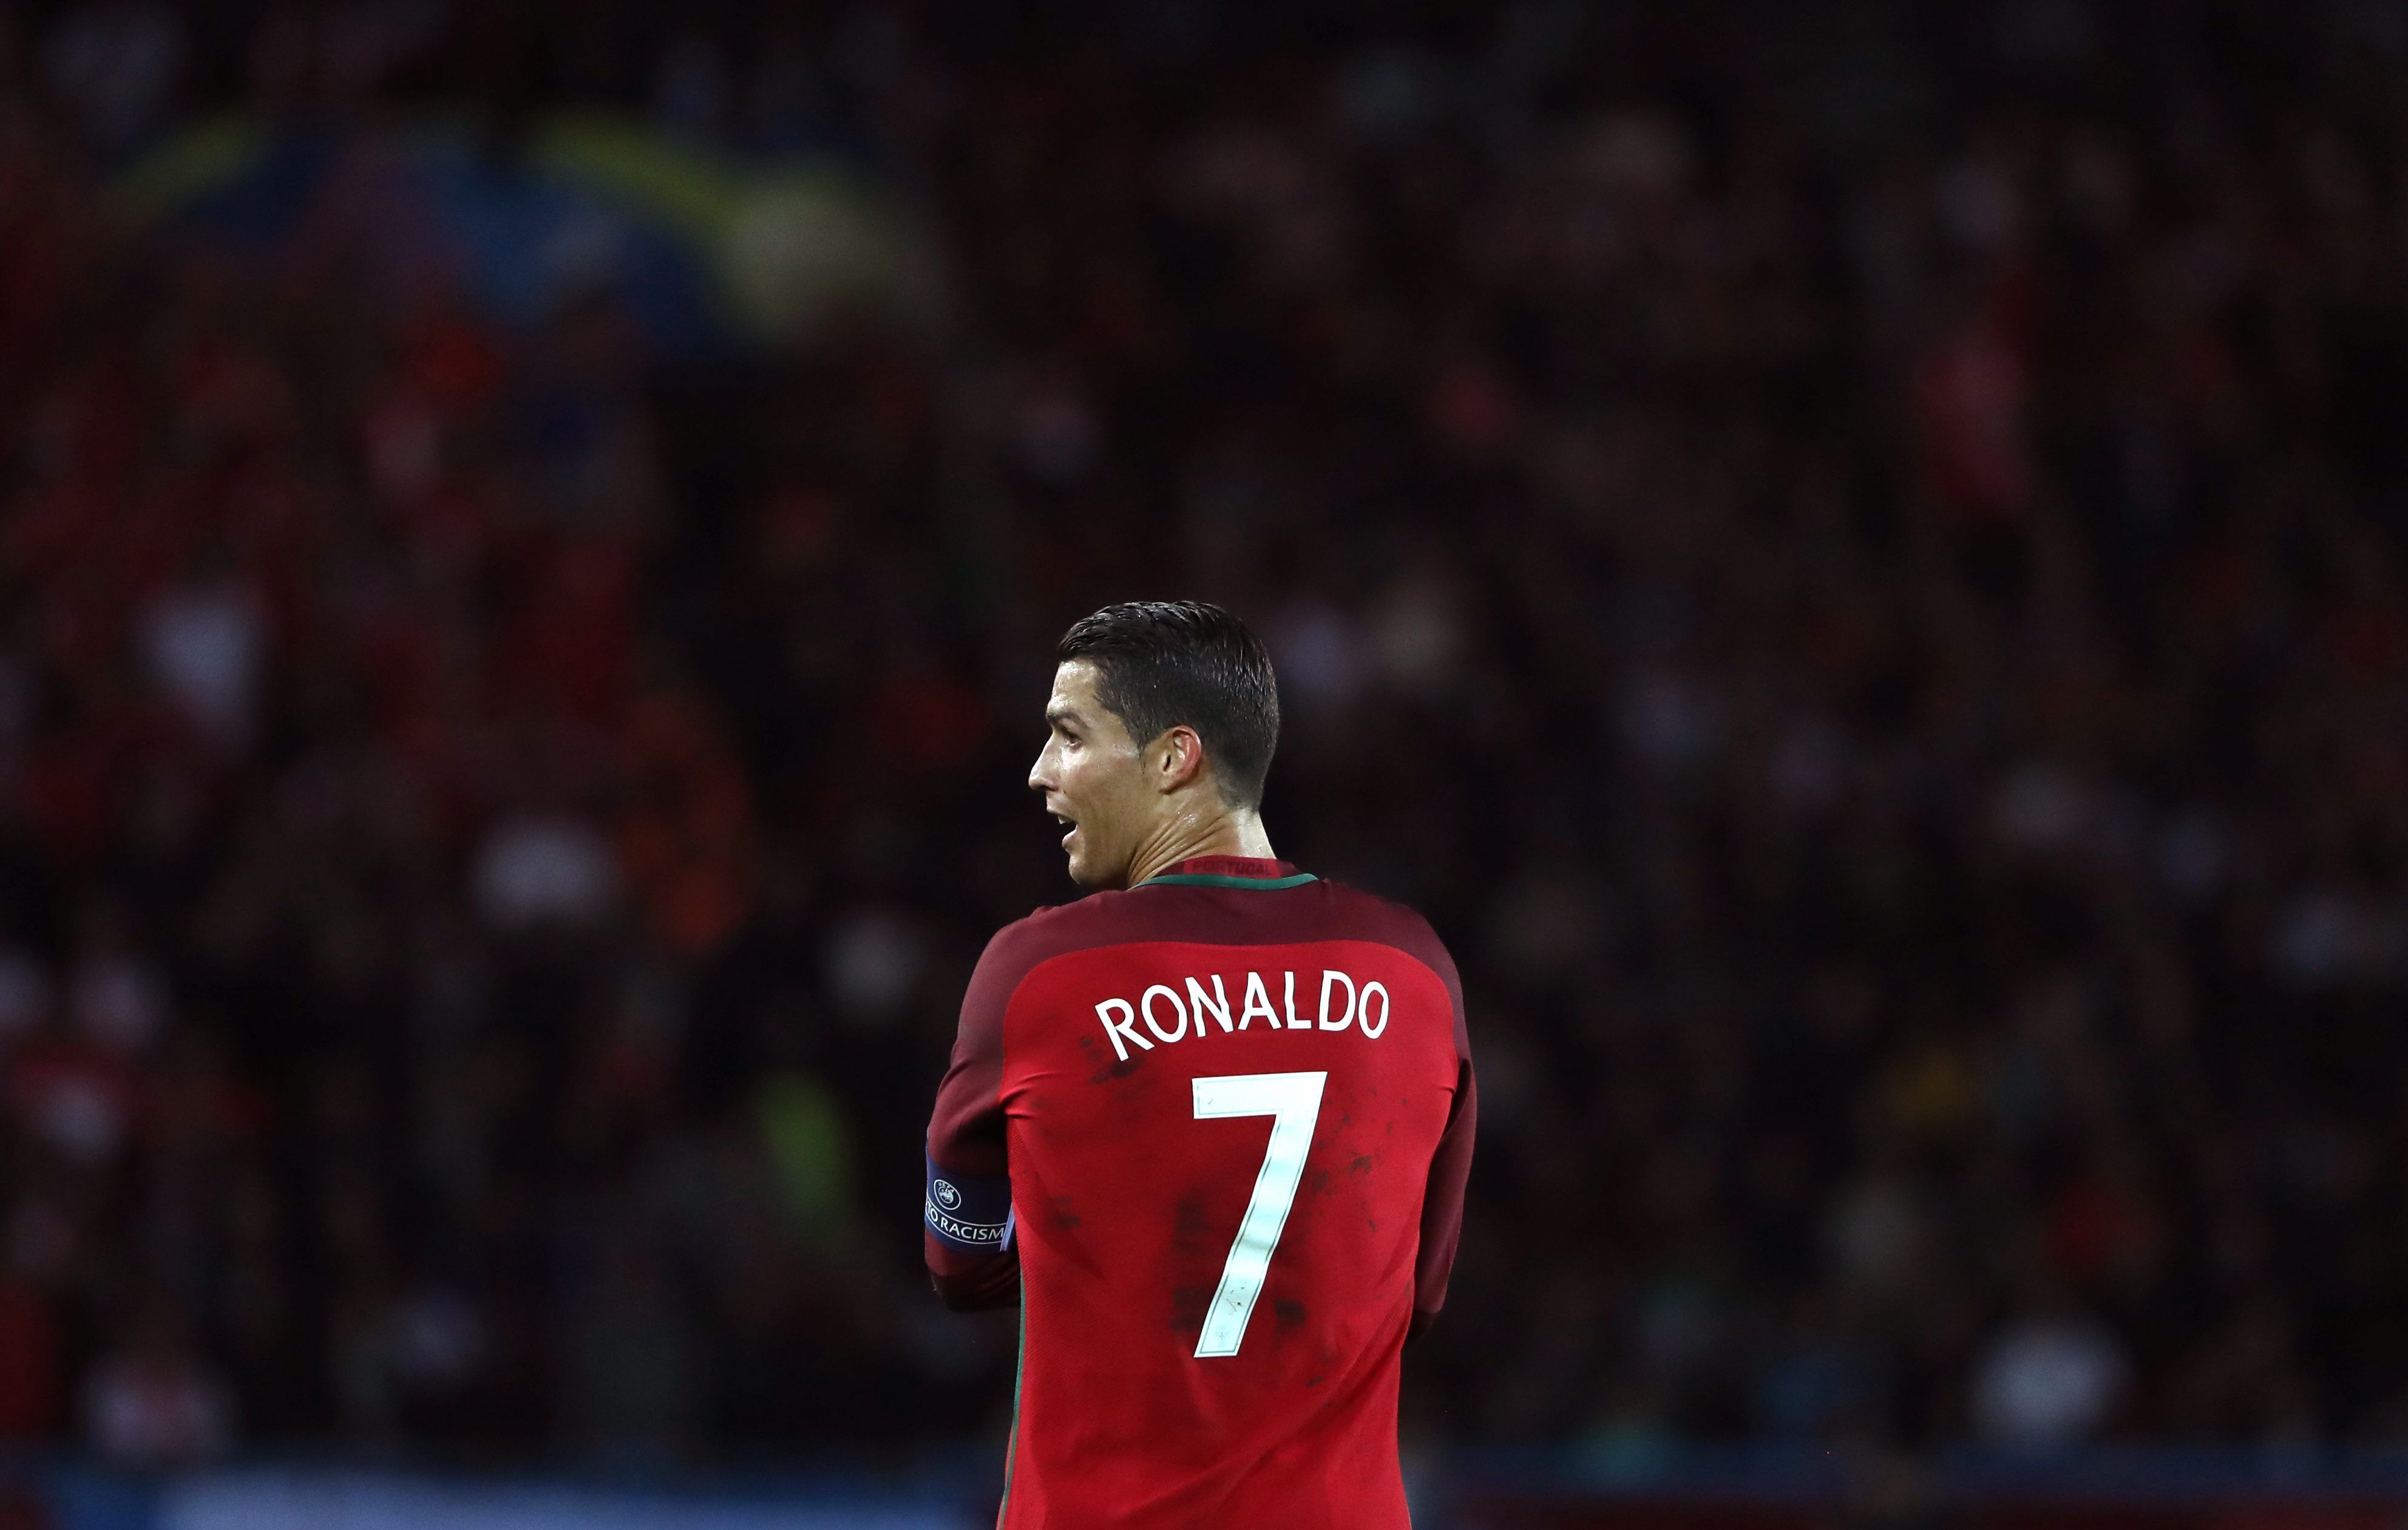 La prensa portuguesa sobre Ronaldo: "No marca ni de penalti"